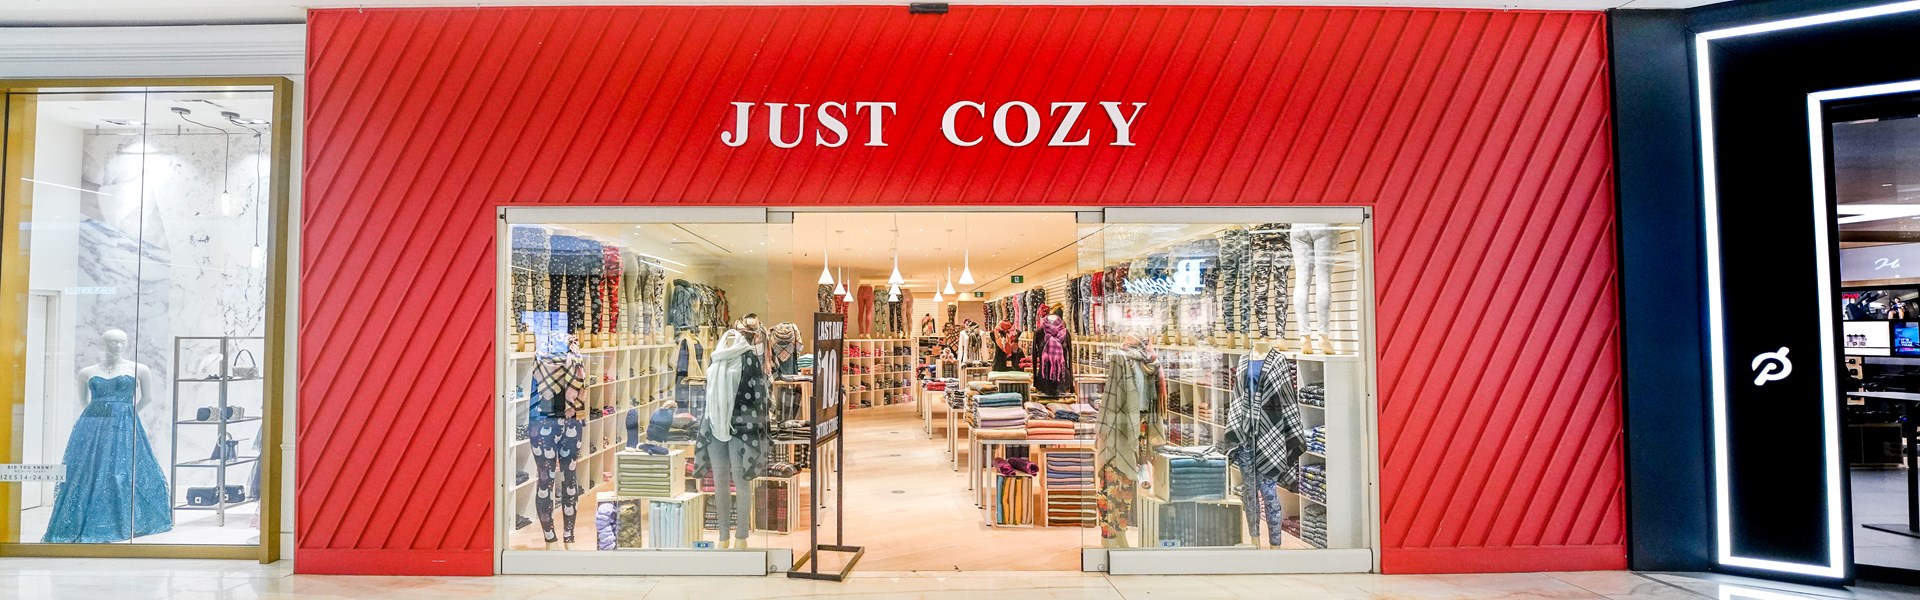 Just Cozy  West Edmonton Mall